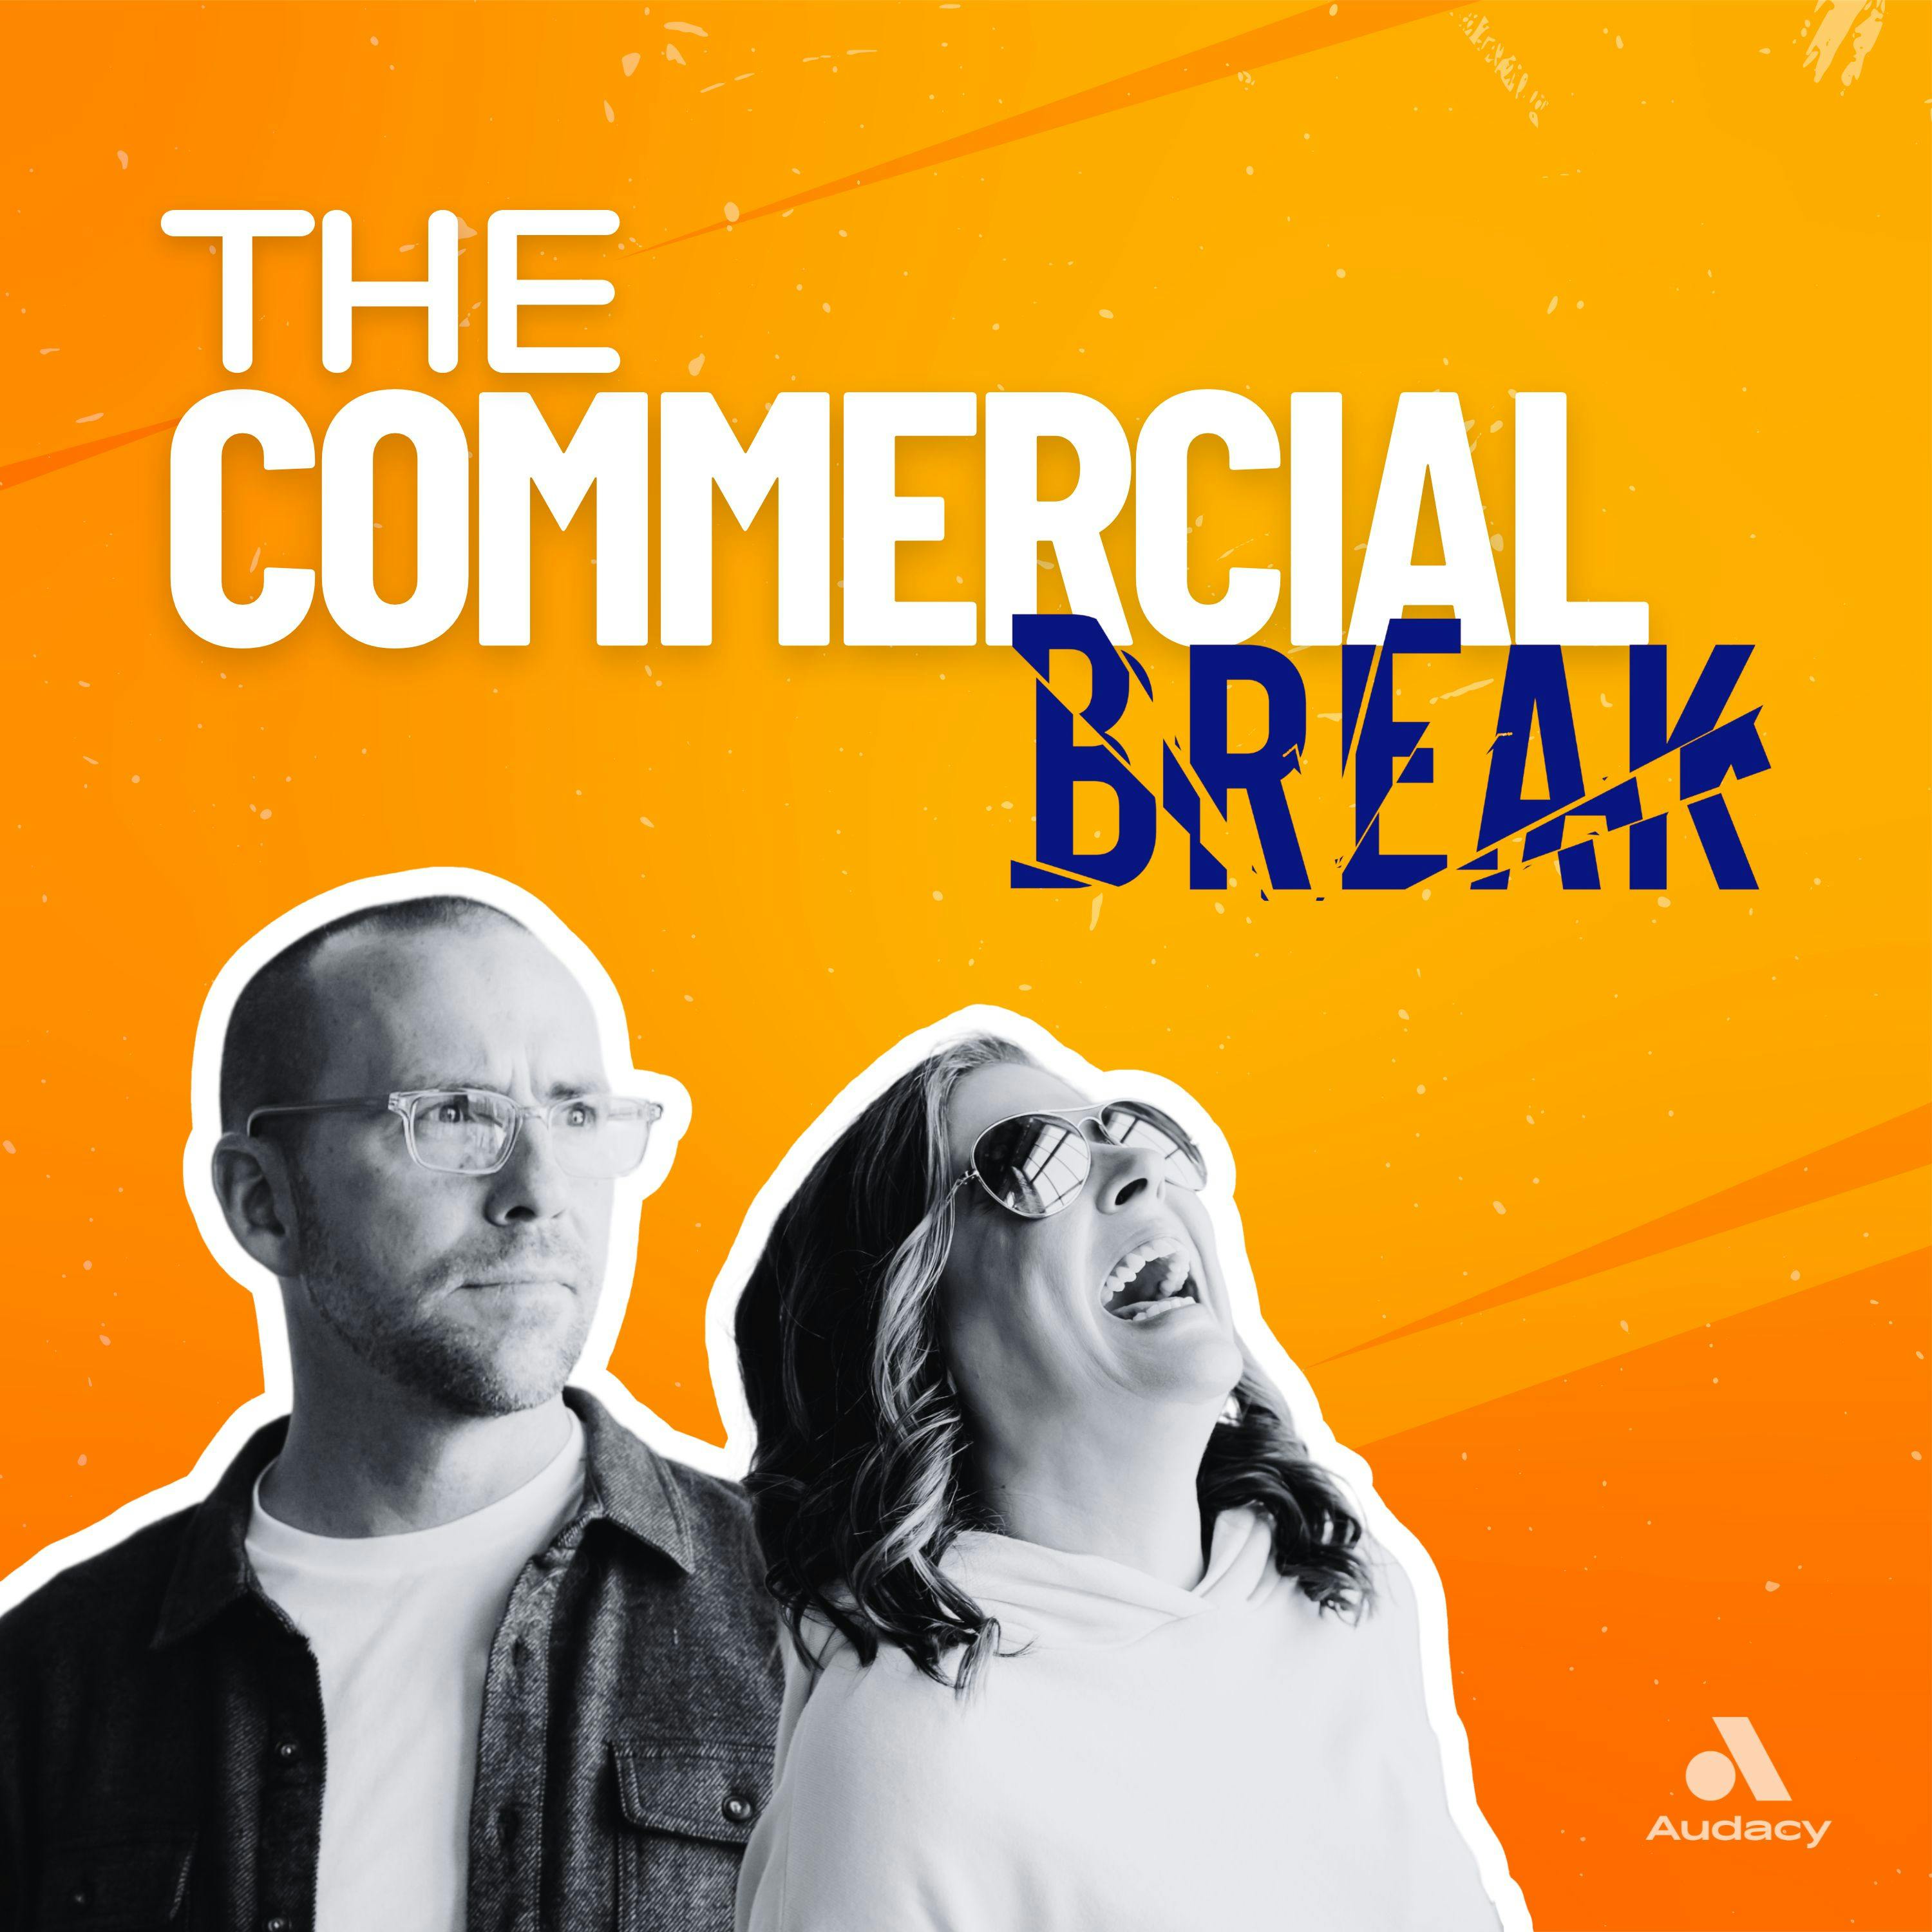 The Bone-O-Meter! by Commercial Break LLC 